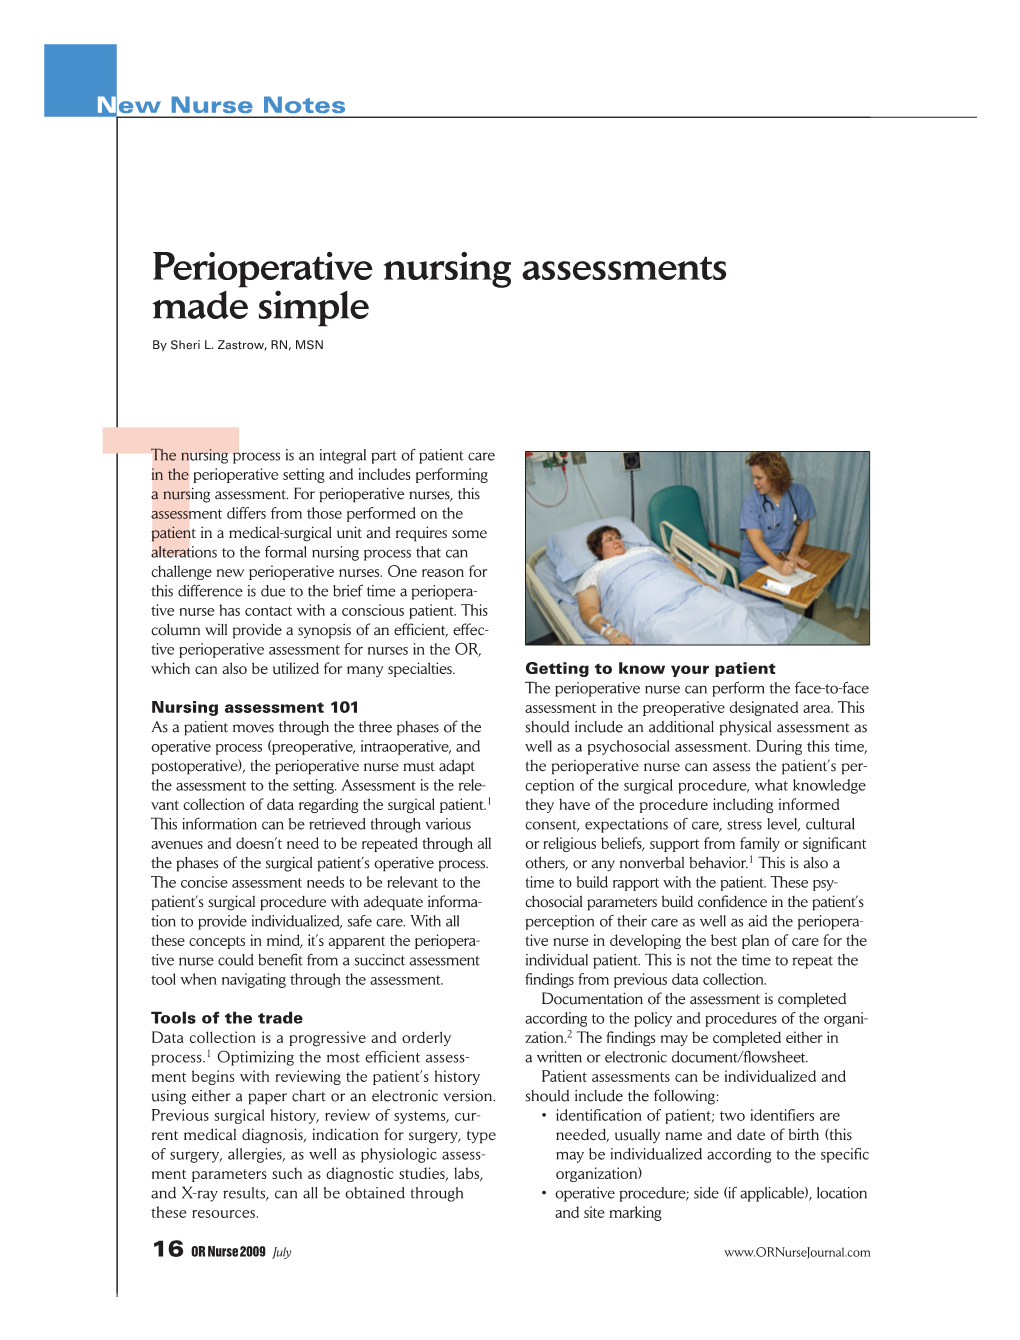 Perioperative Nursing Assessments Made Simple